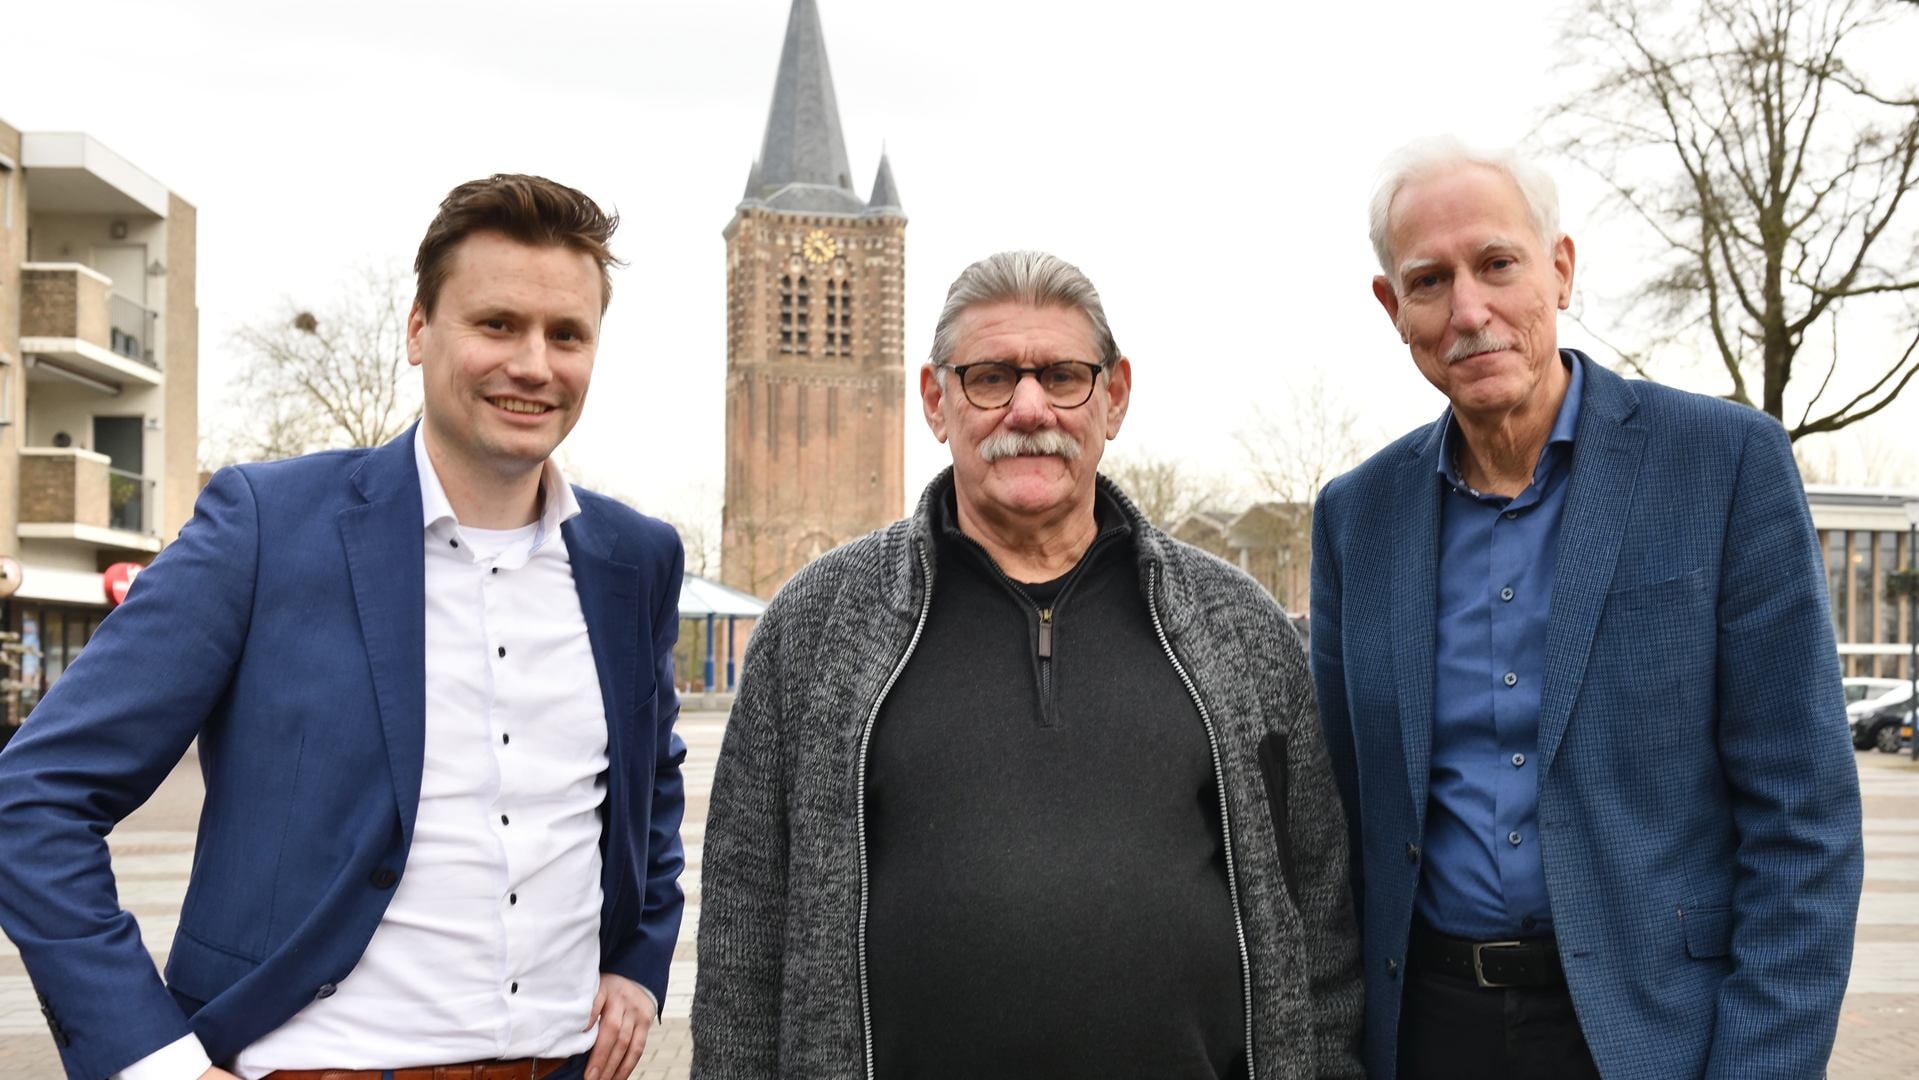 Luc Ros, Ondernemingsvereniging Son en Breugel (l) en wethouder Jan Boersma, Gemeente Son en Breugel (r) met in hun midden Hans Merks als centrummanager Son en Breugel